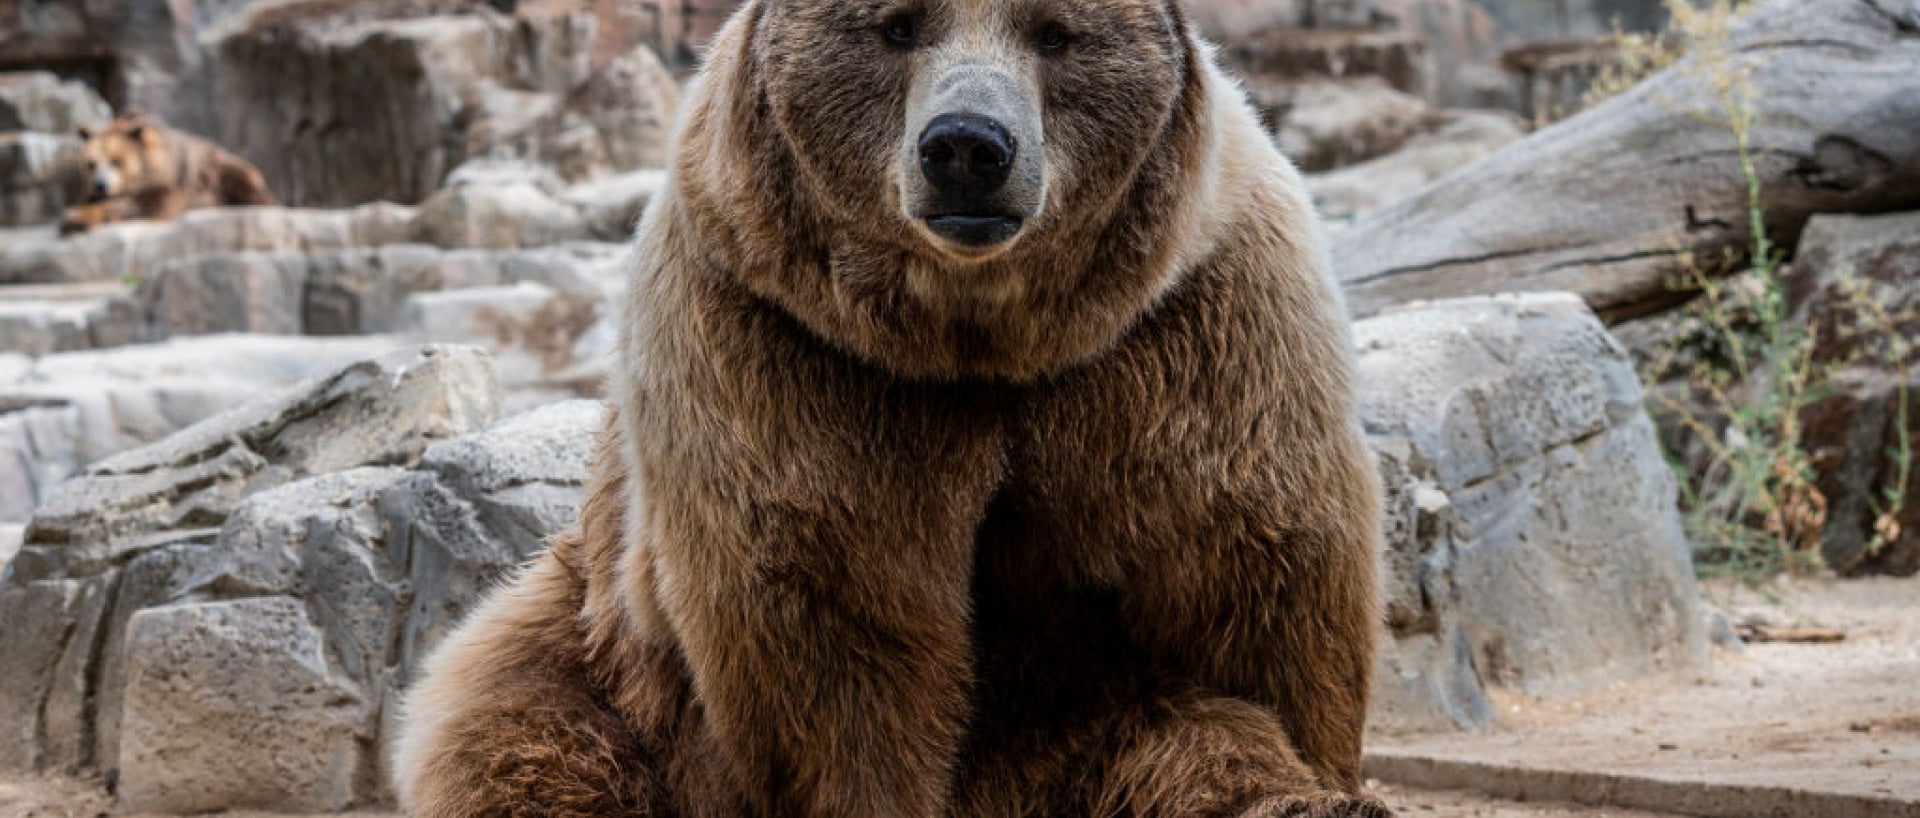 Brown bear near rocks